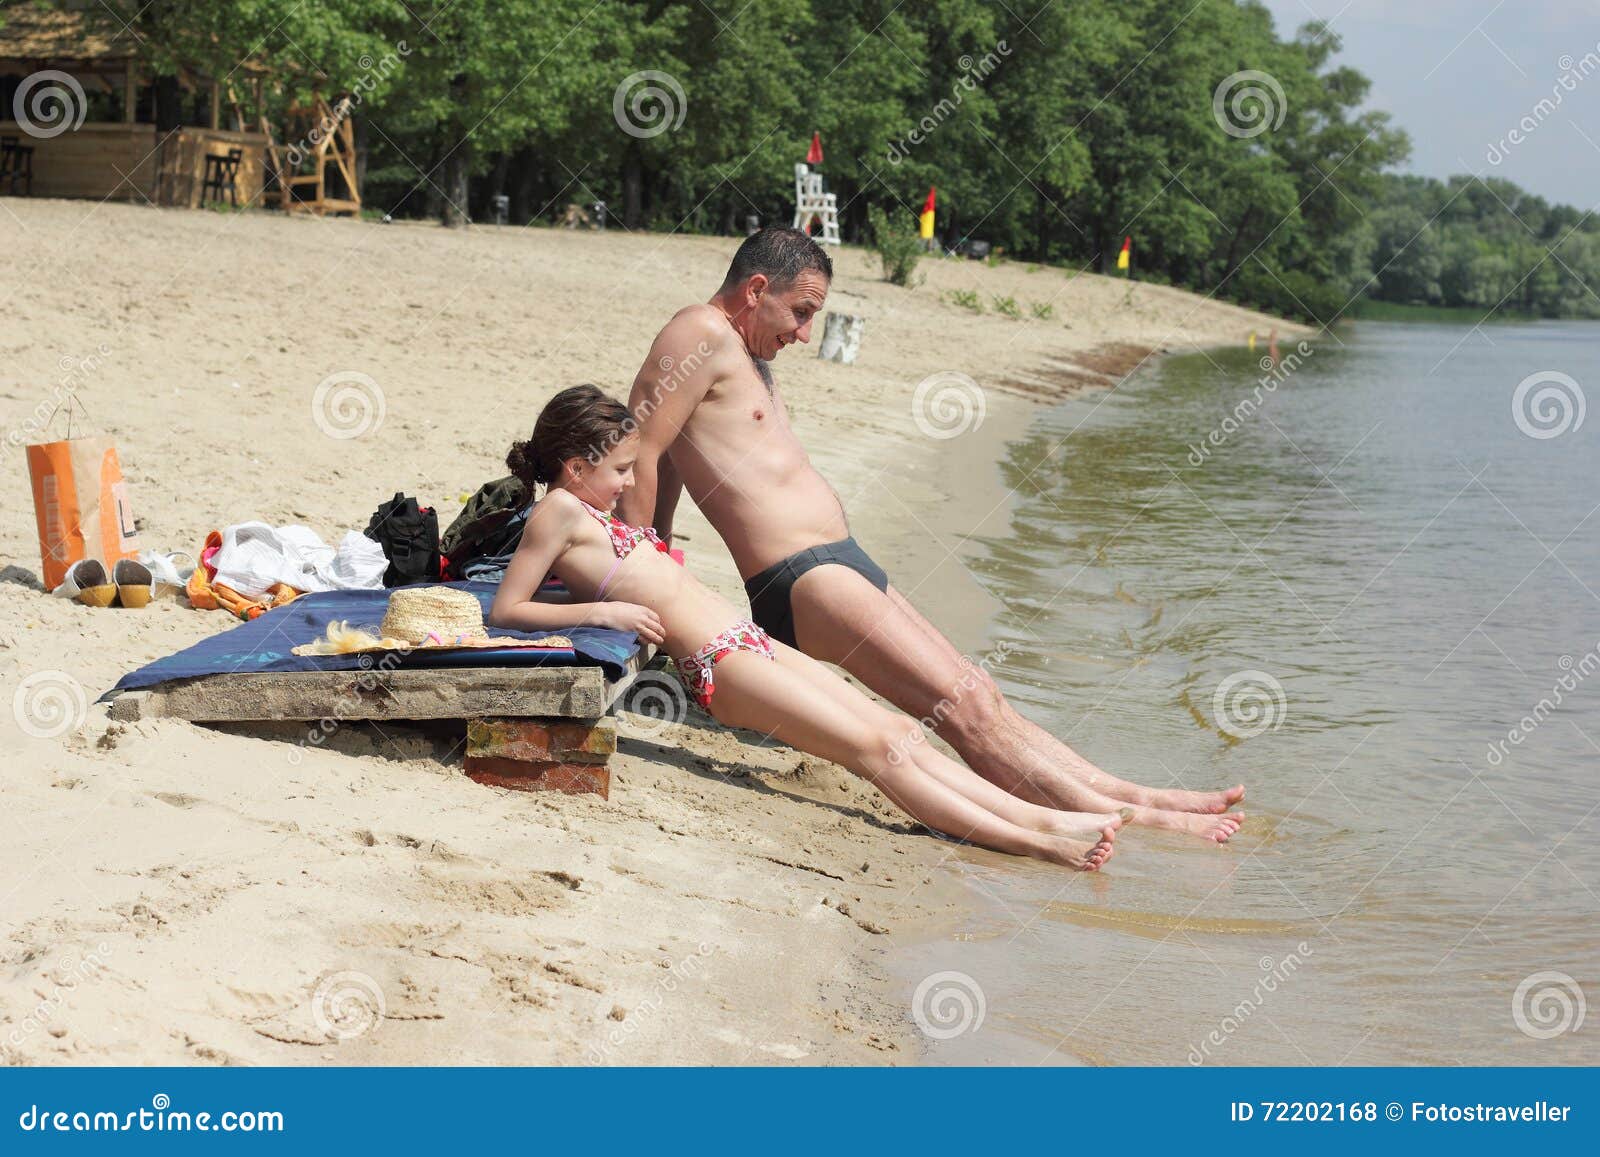 alan marnie add mom and daughter nude beach photo